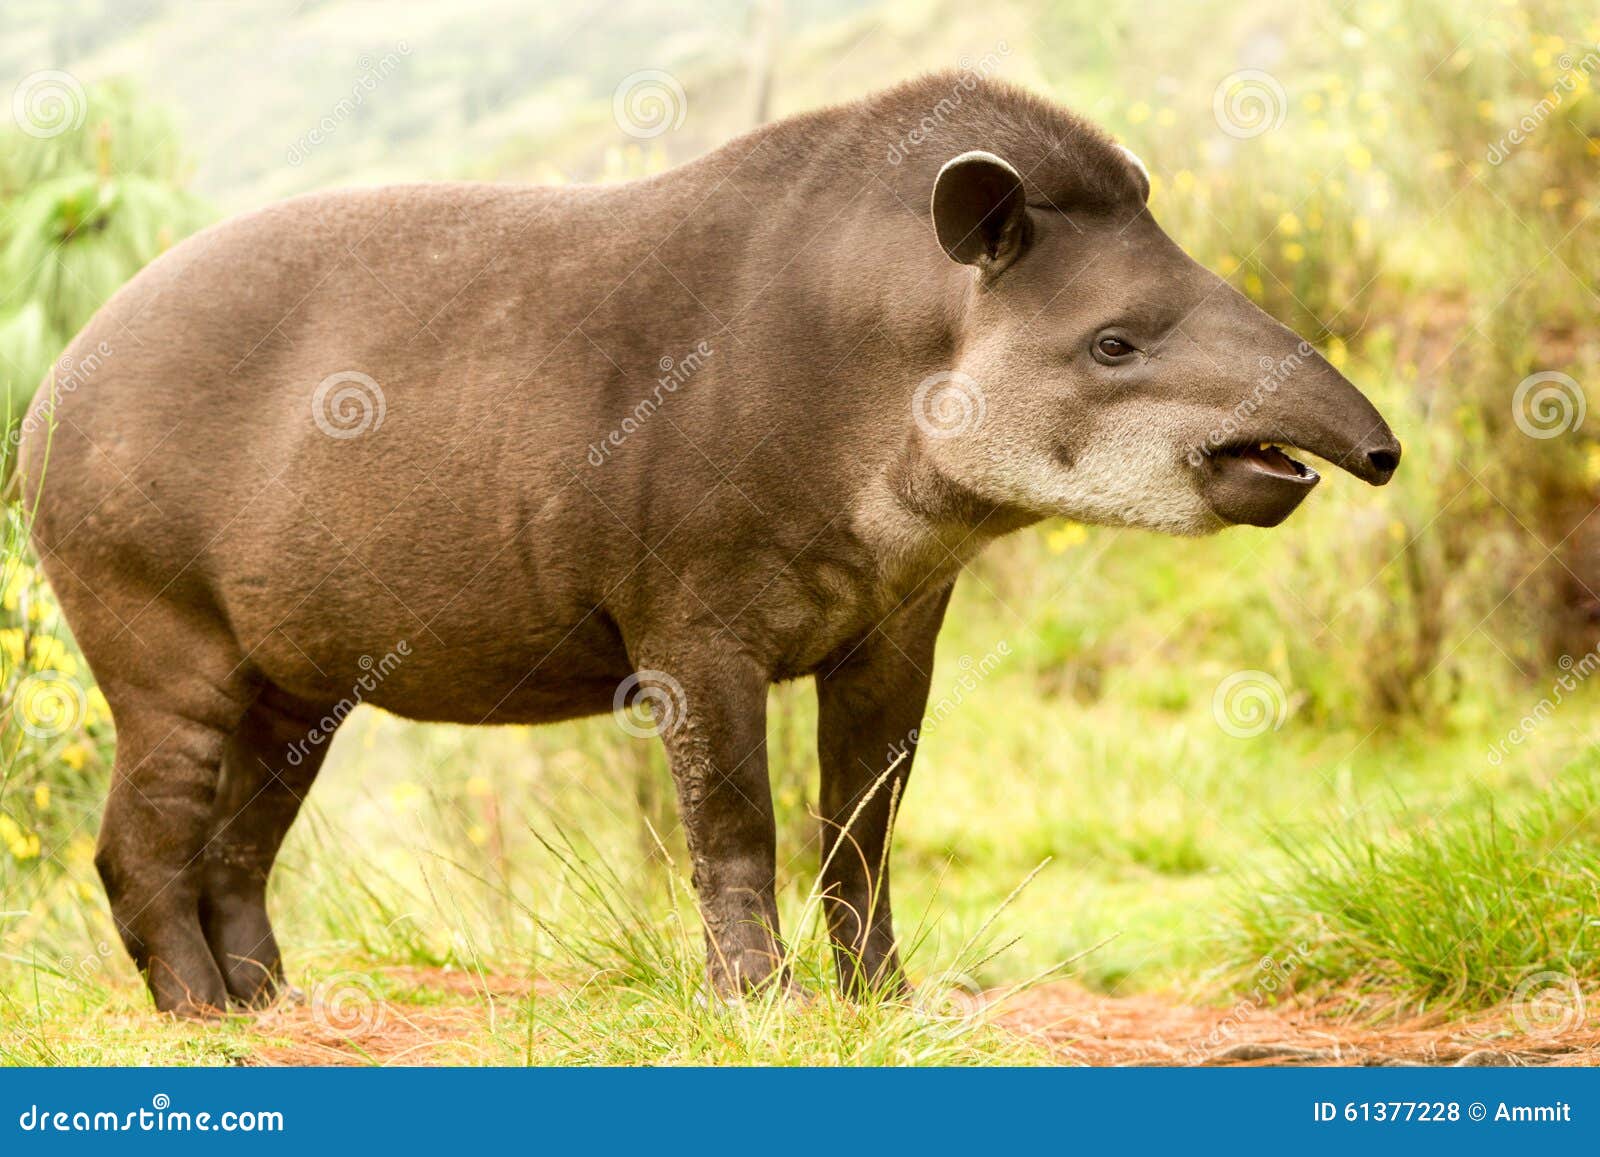 1,727 Tapir Animal Stock Photos - Free & Royalty-Free Stock Photos from  Dreamstime